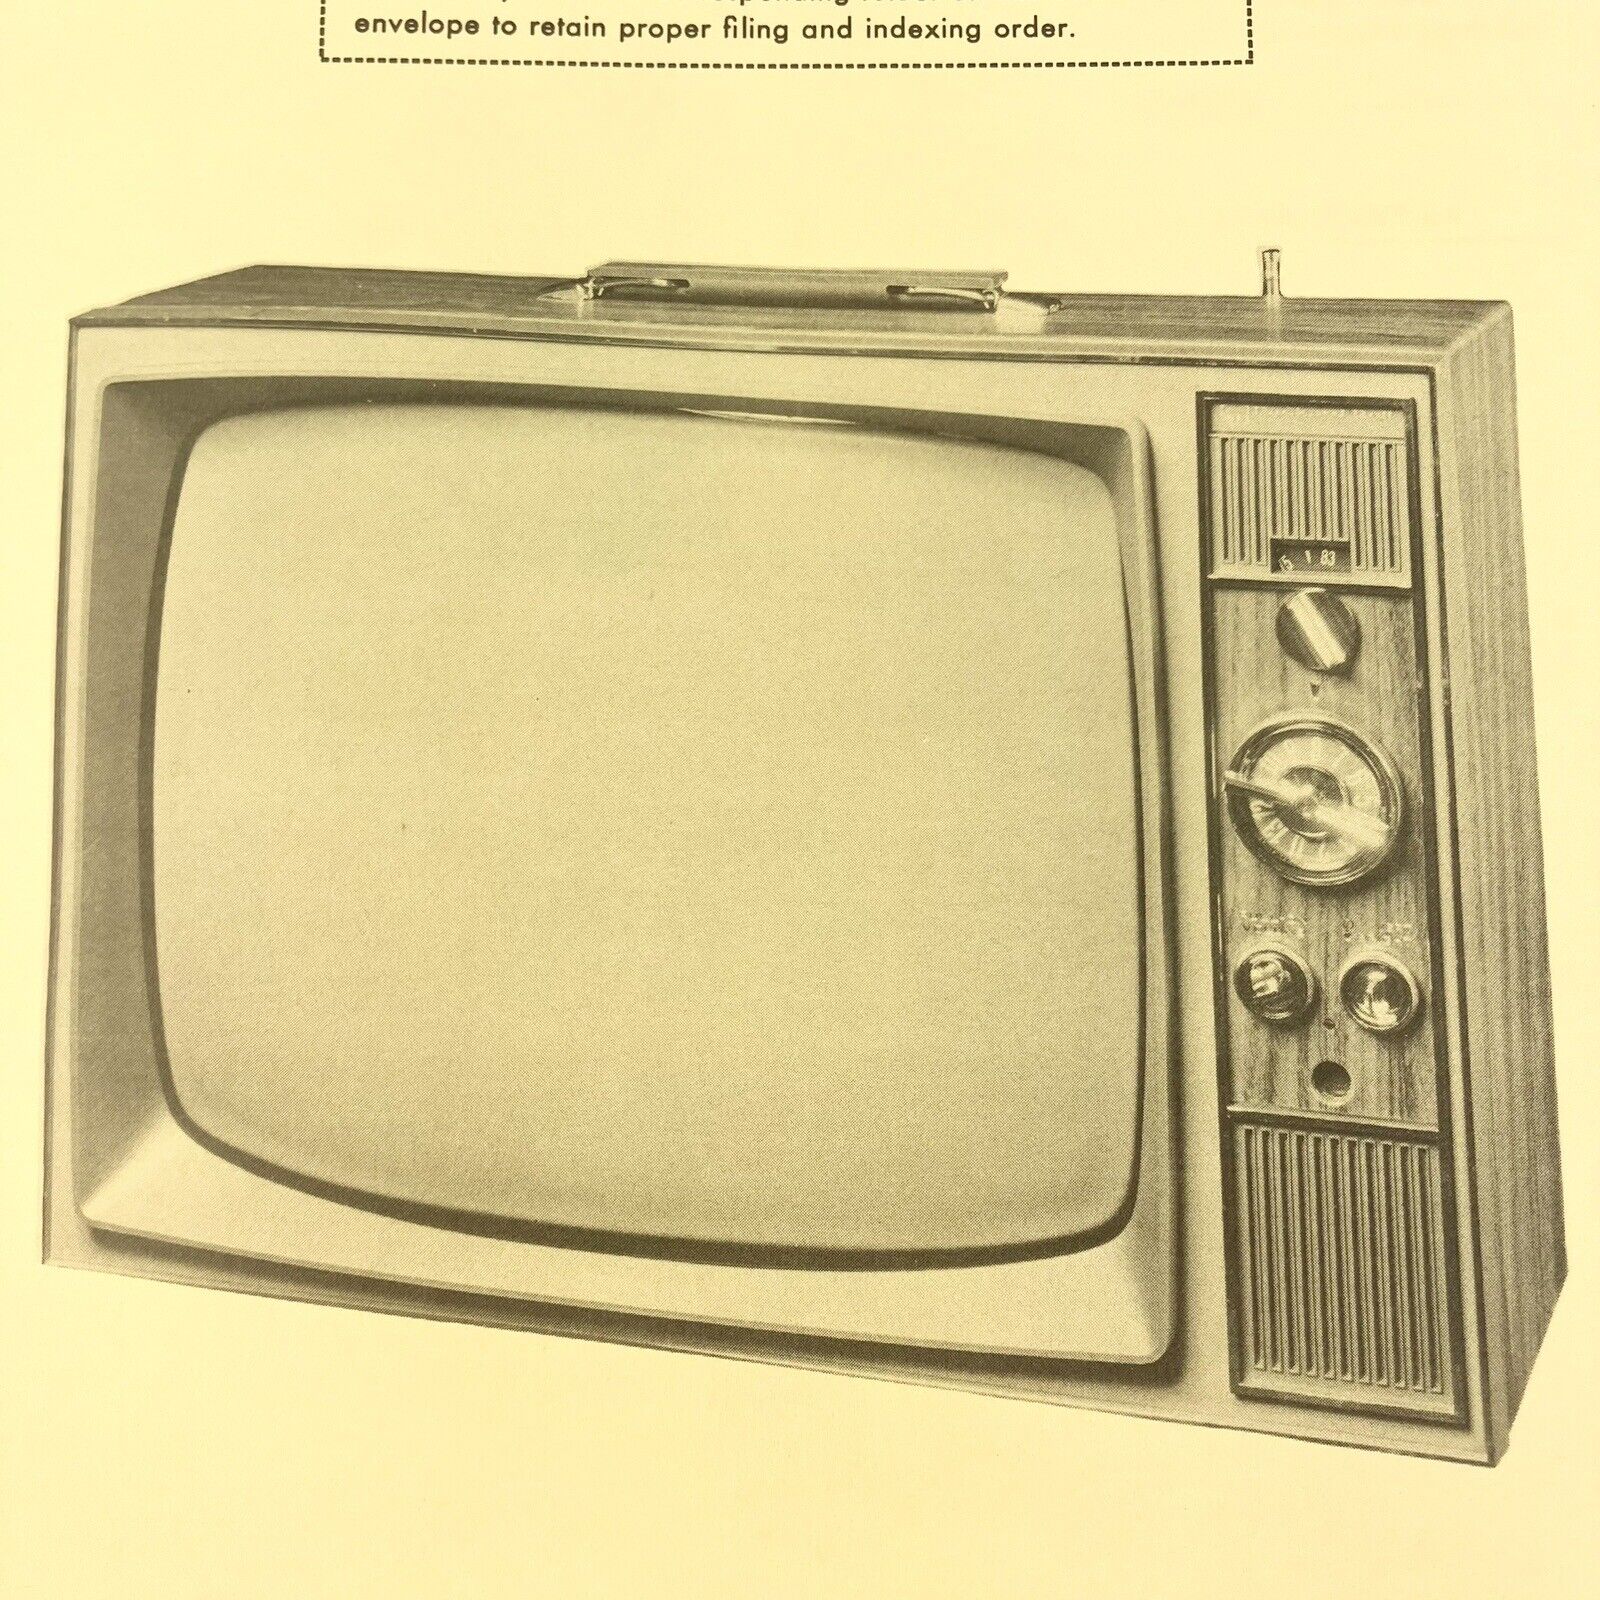 1967 Packard Bell TV 88-21 Wire Schematic Service Manual Vintage Original